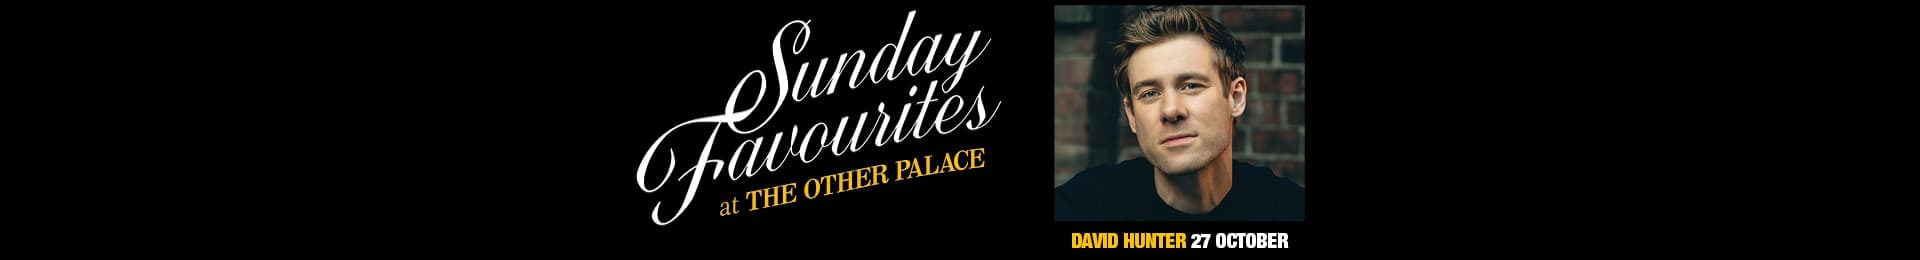 Sunday Favourites: David Hunter banner image